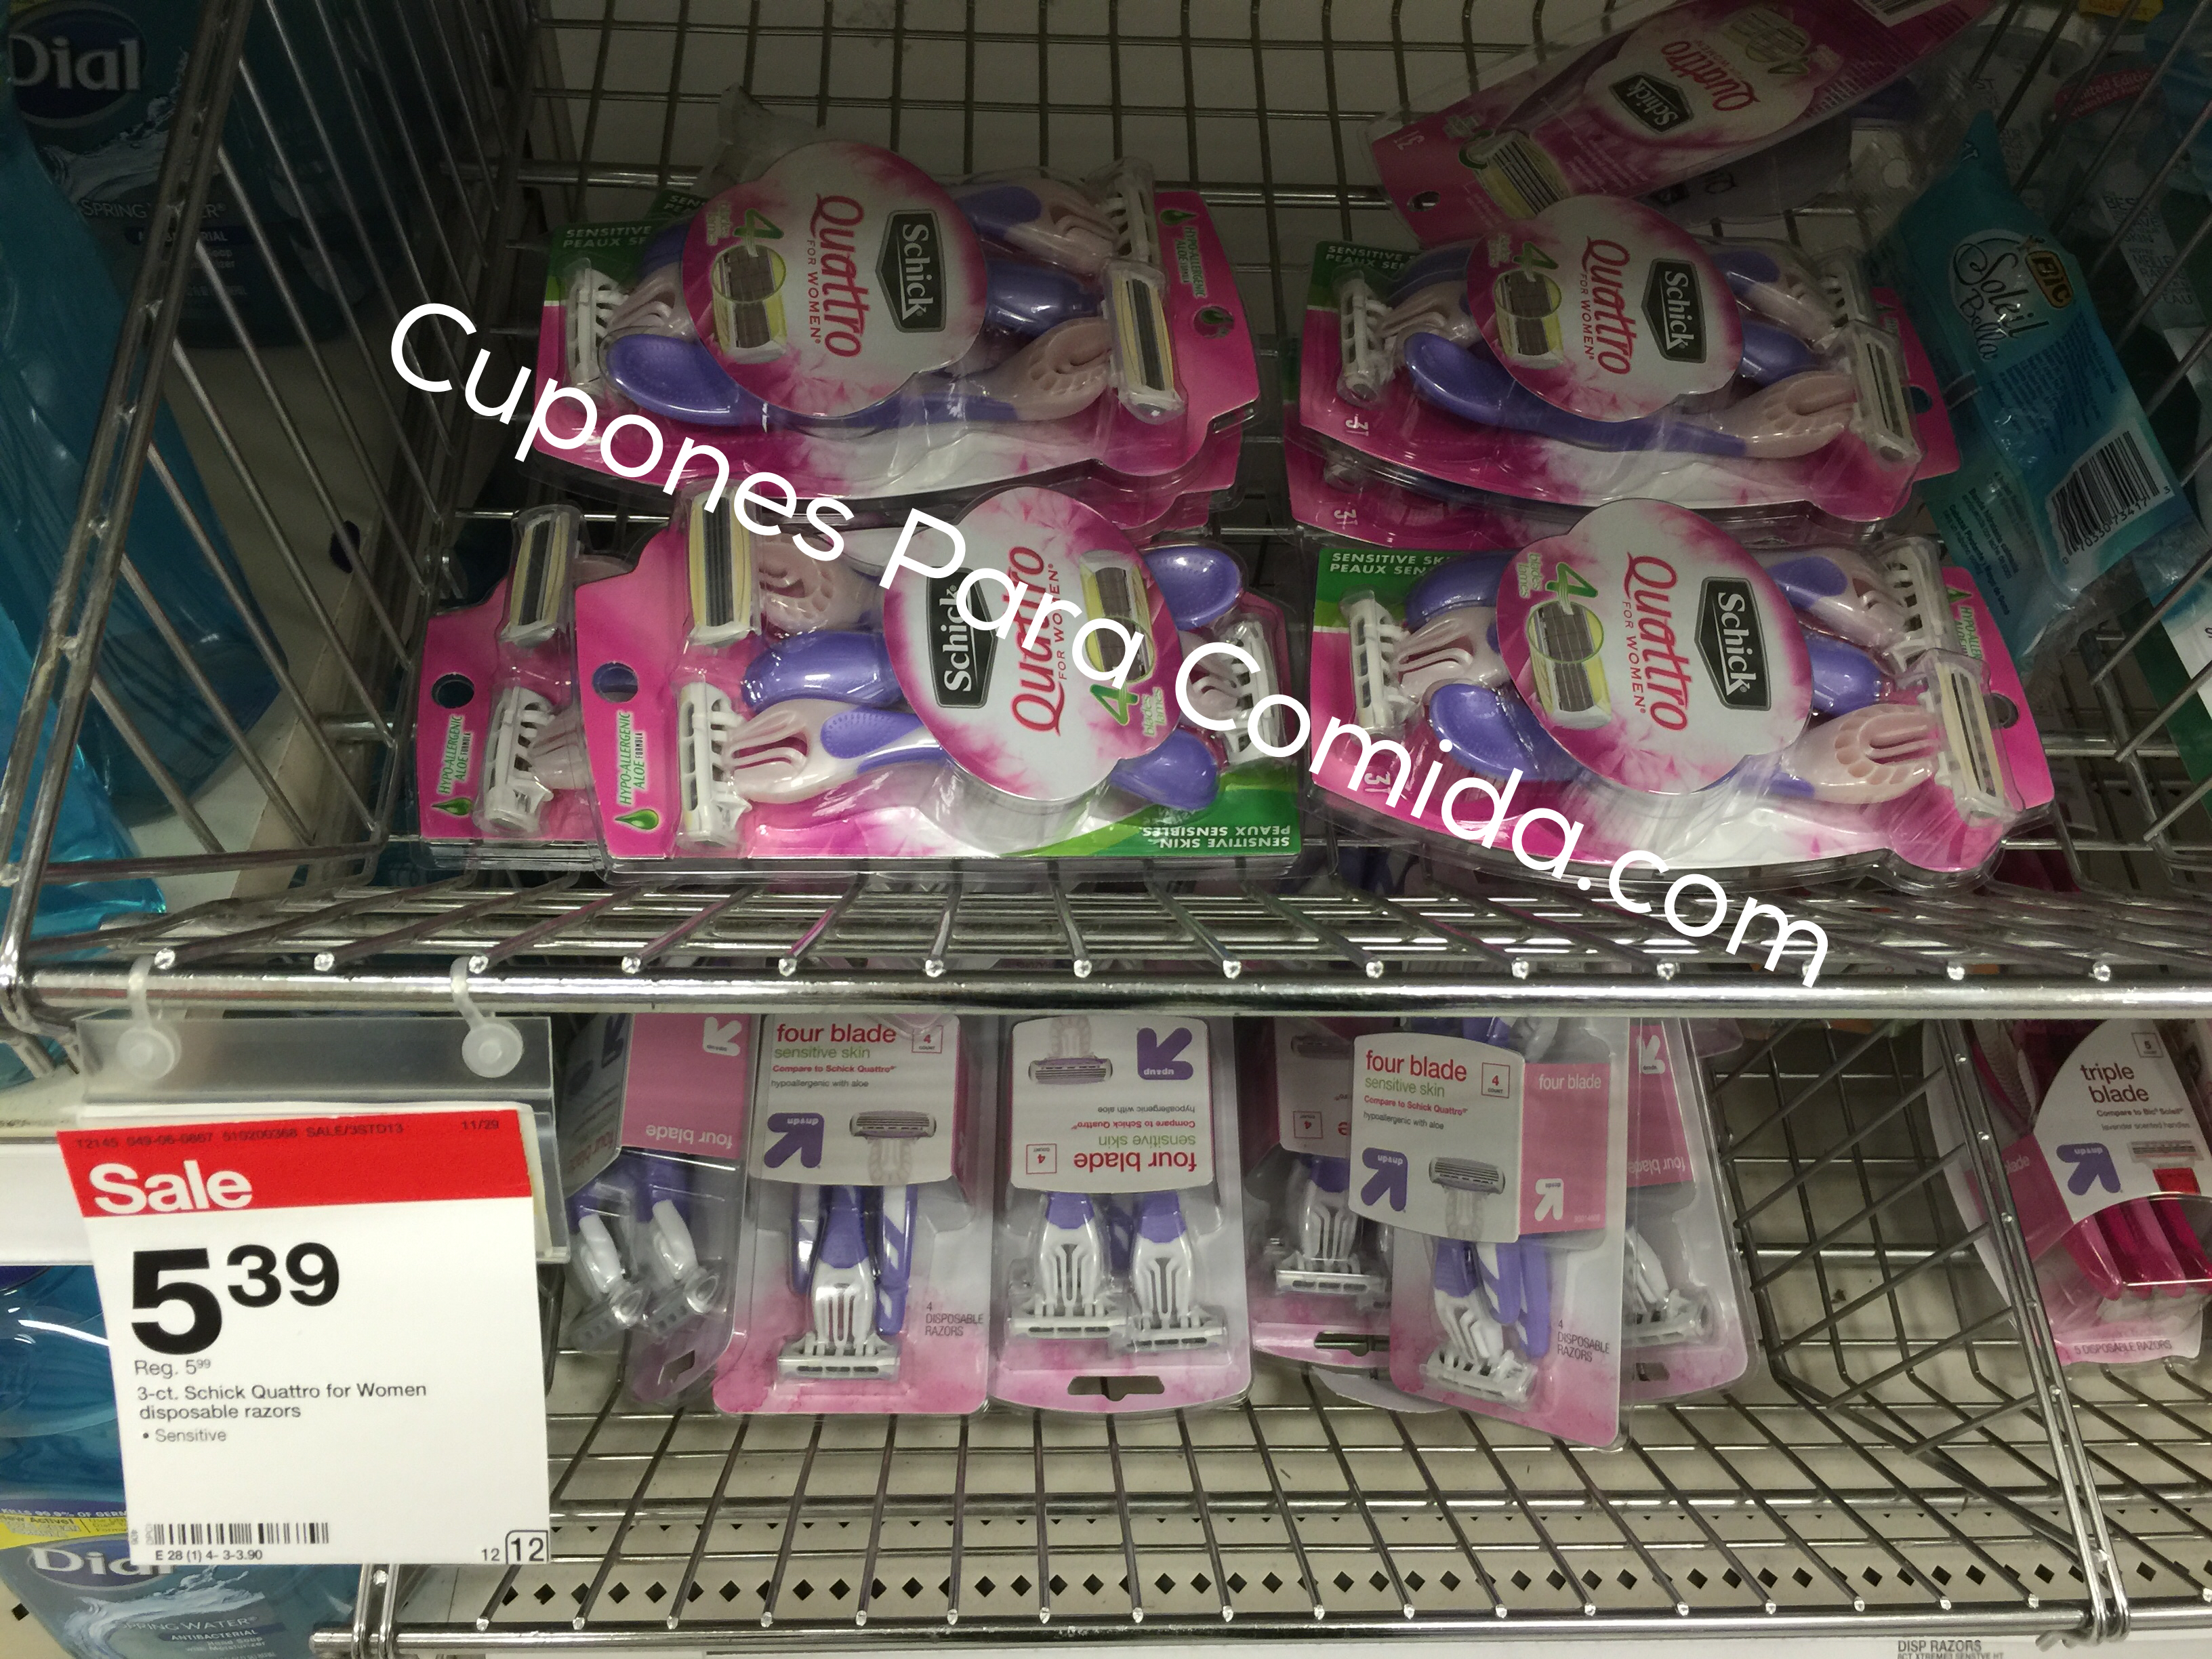 Schick Quattro for women disposable razors 12/06/15